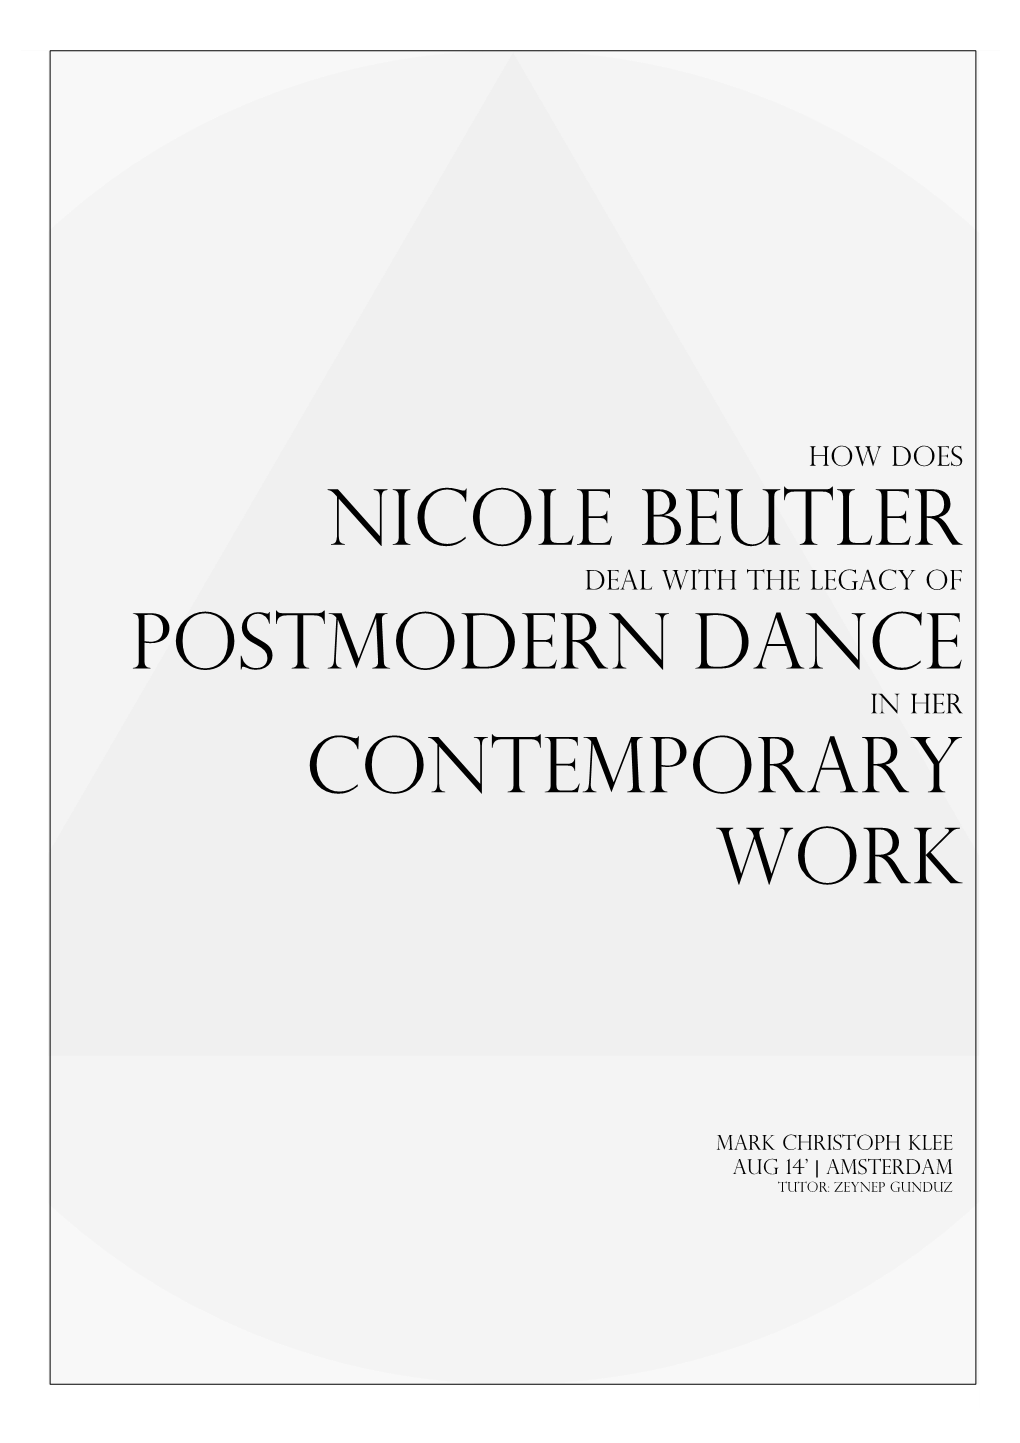 NICOLE Beutler POSTMODERN DANCE CONTEMPORARY WORK